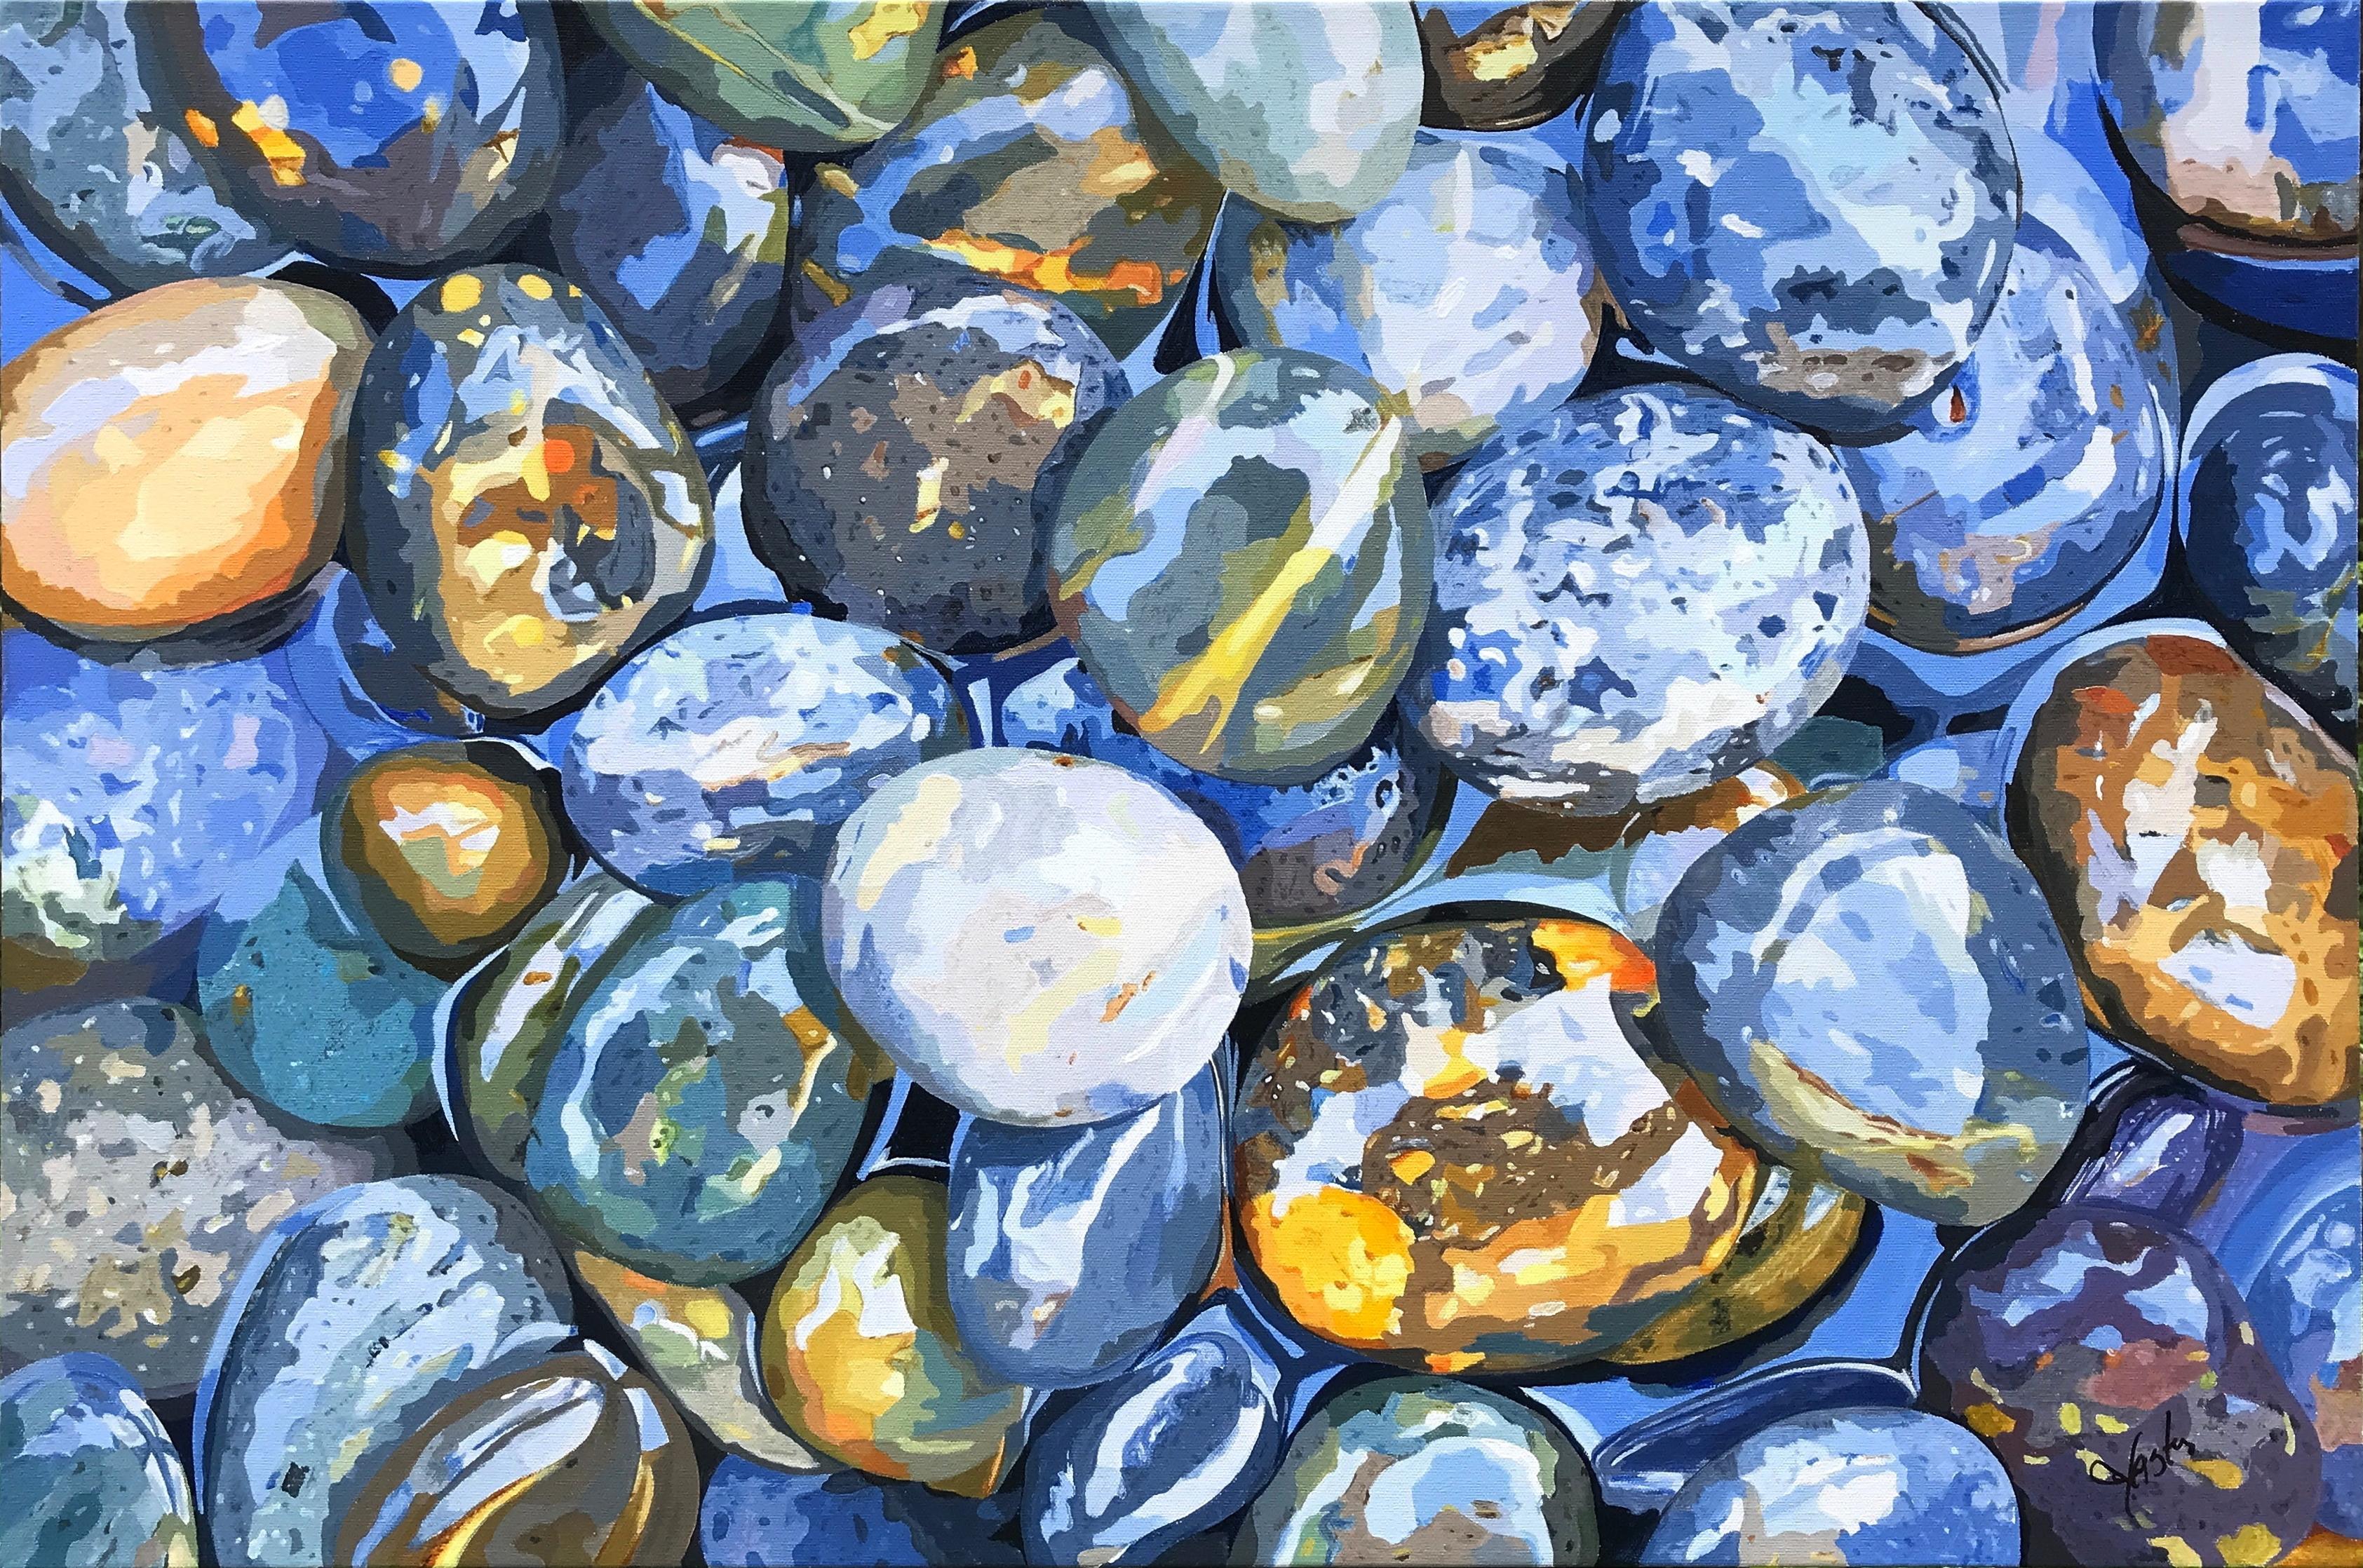 John Jaster Landscape Painting - Blue Stones in Water, Original Painting